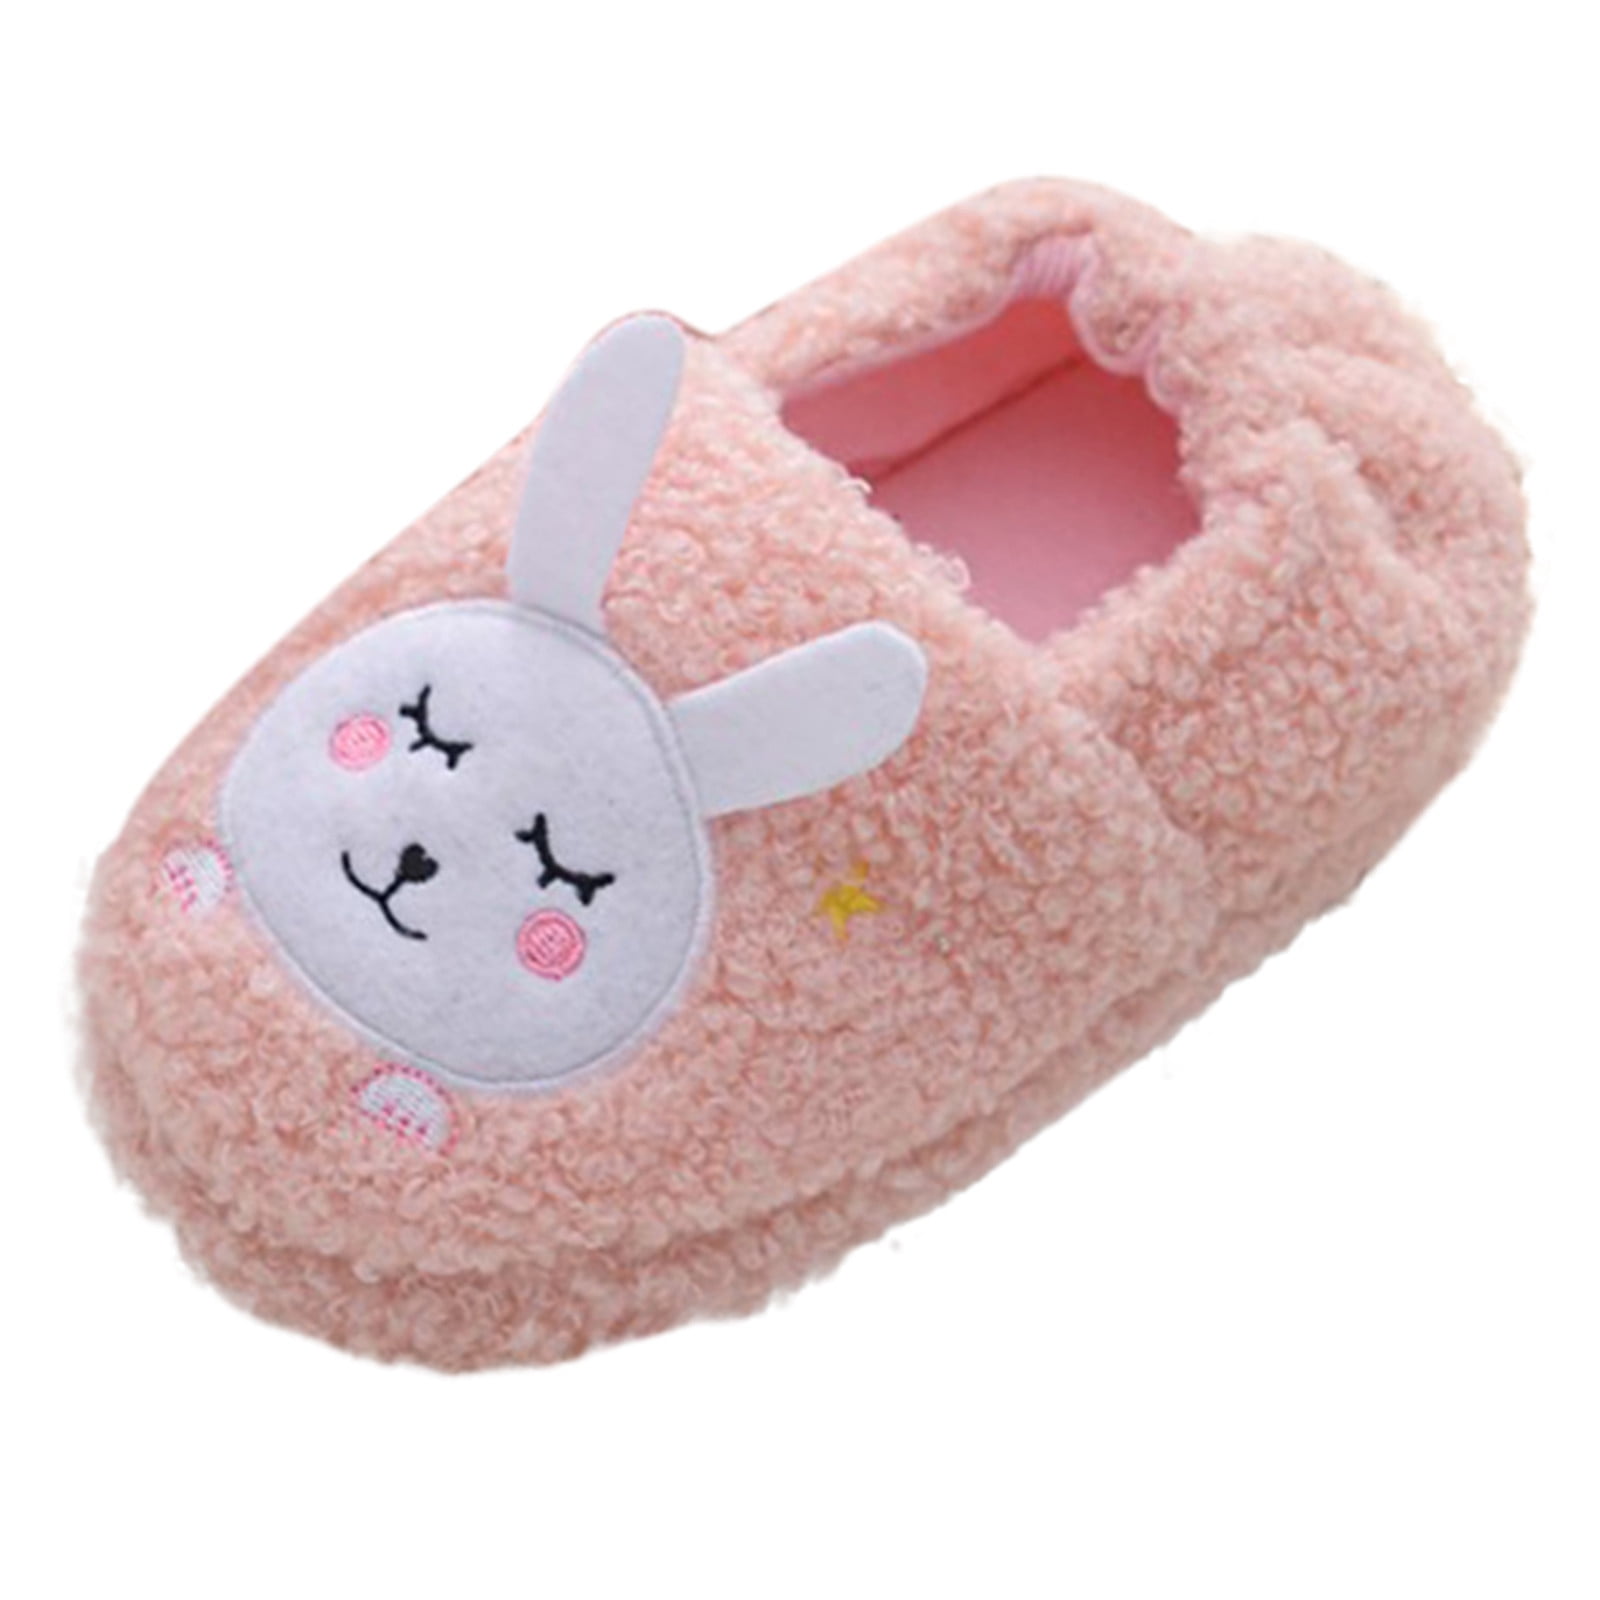 Details about   Kid Baby Warm Shoes Chrildren Girl Cartoon Soft-Sole Winter Indoor Home Slippers 